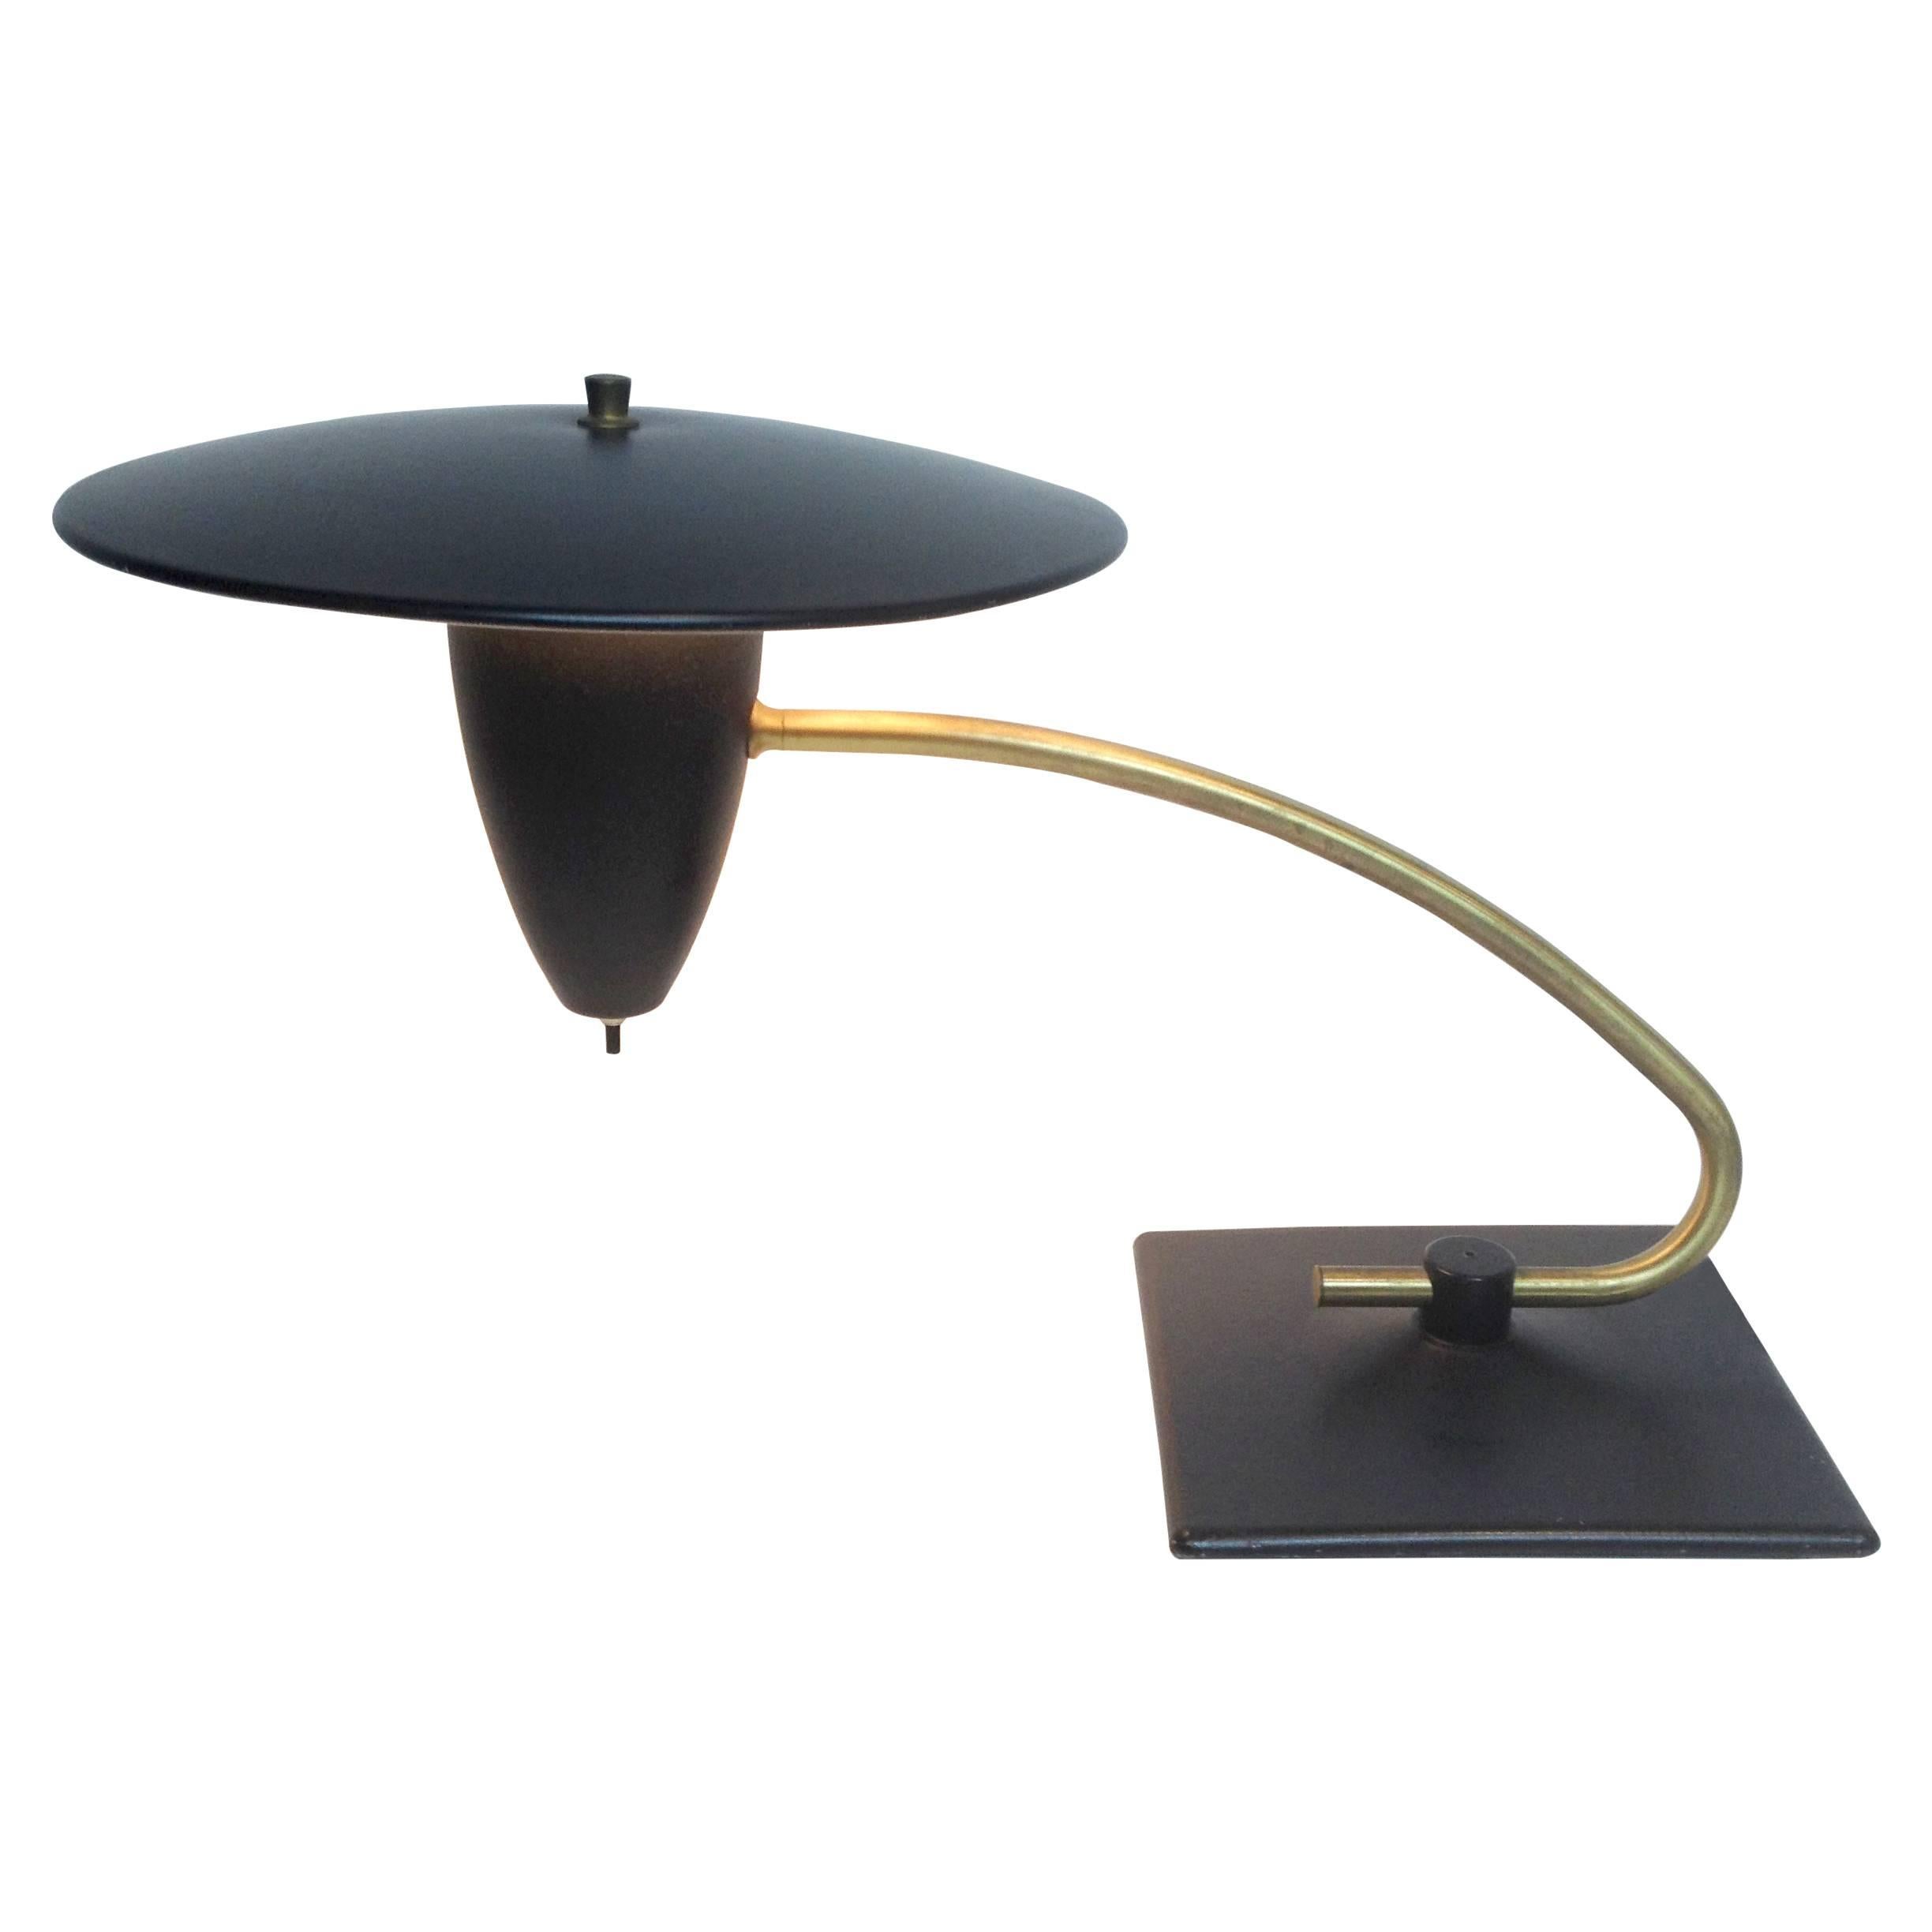 1950s "Sight Light" Industrial Desk Lamp By M.G Wheeler Co. Inc For Sale